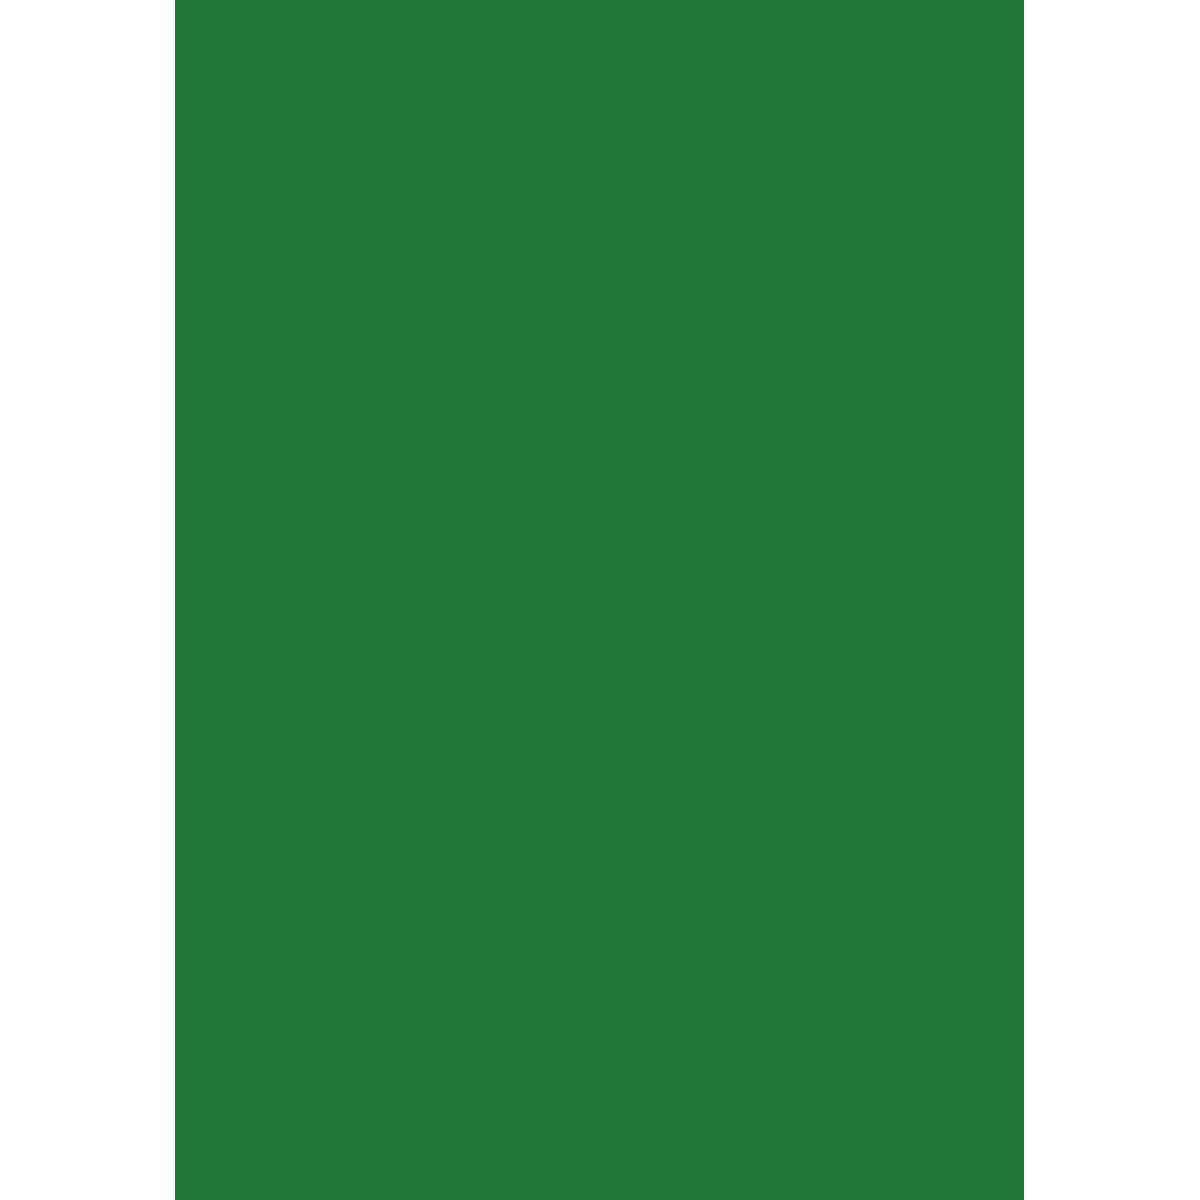 Arkusz piankowy Titanum Craft-Fun Series pianka dekoracyjna A4 5 szt. kolor: zielony ciemny 5 ark. (6121)